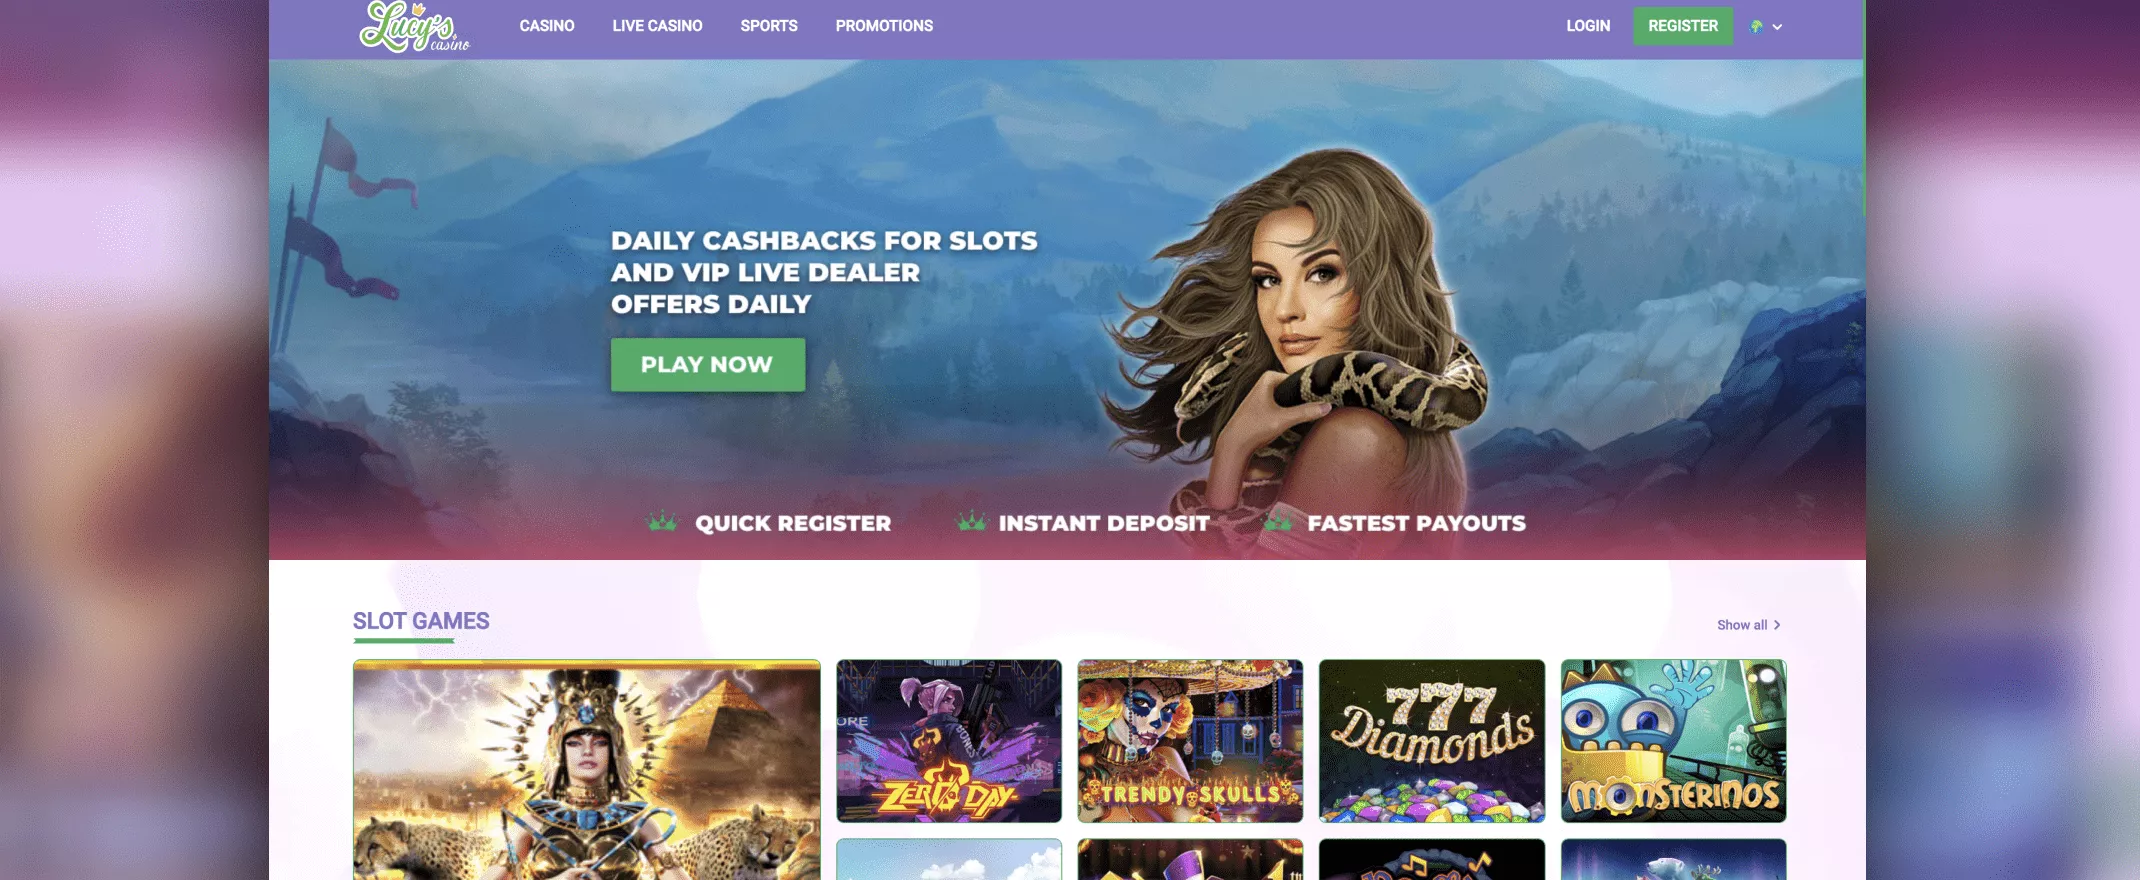 Lucy's Casino screenshot of the homepage